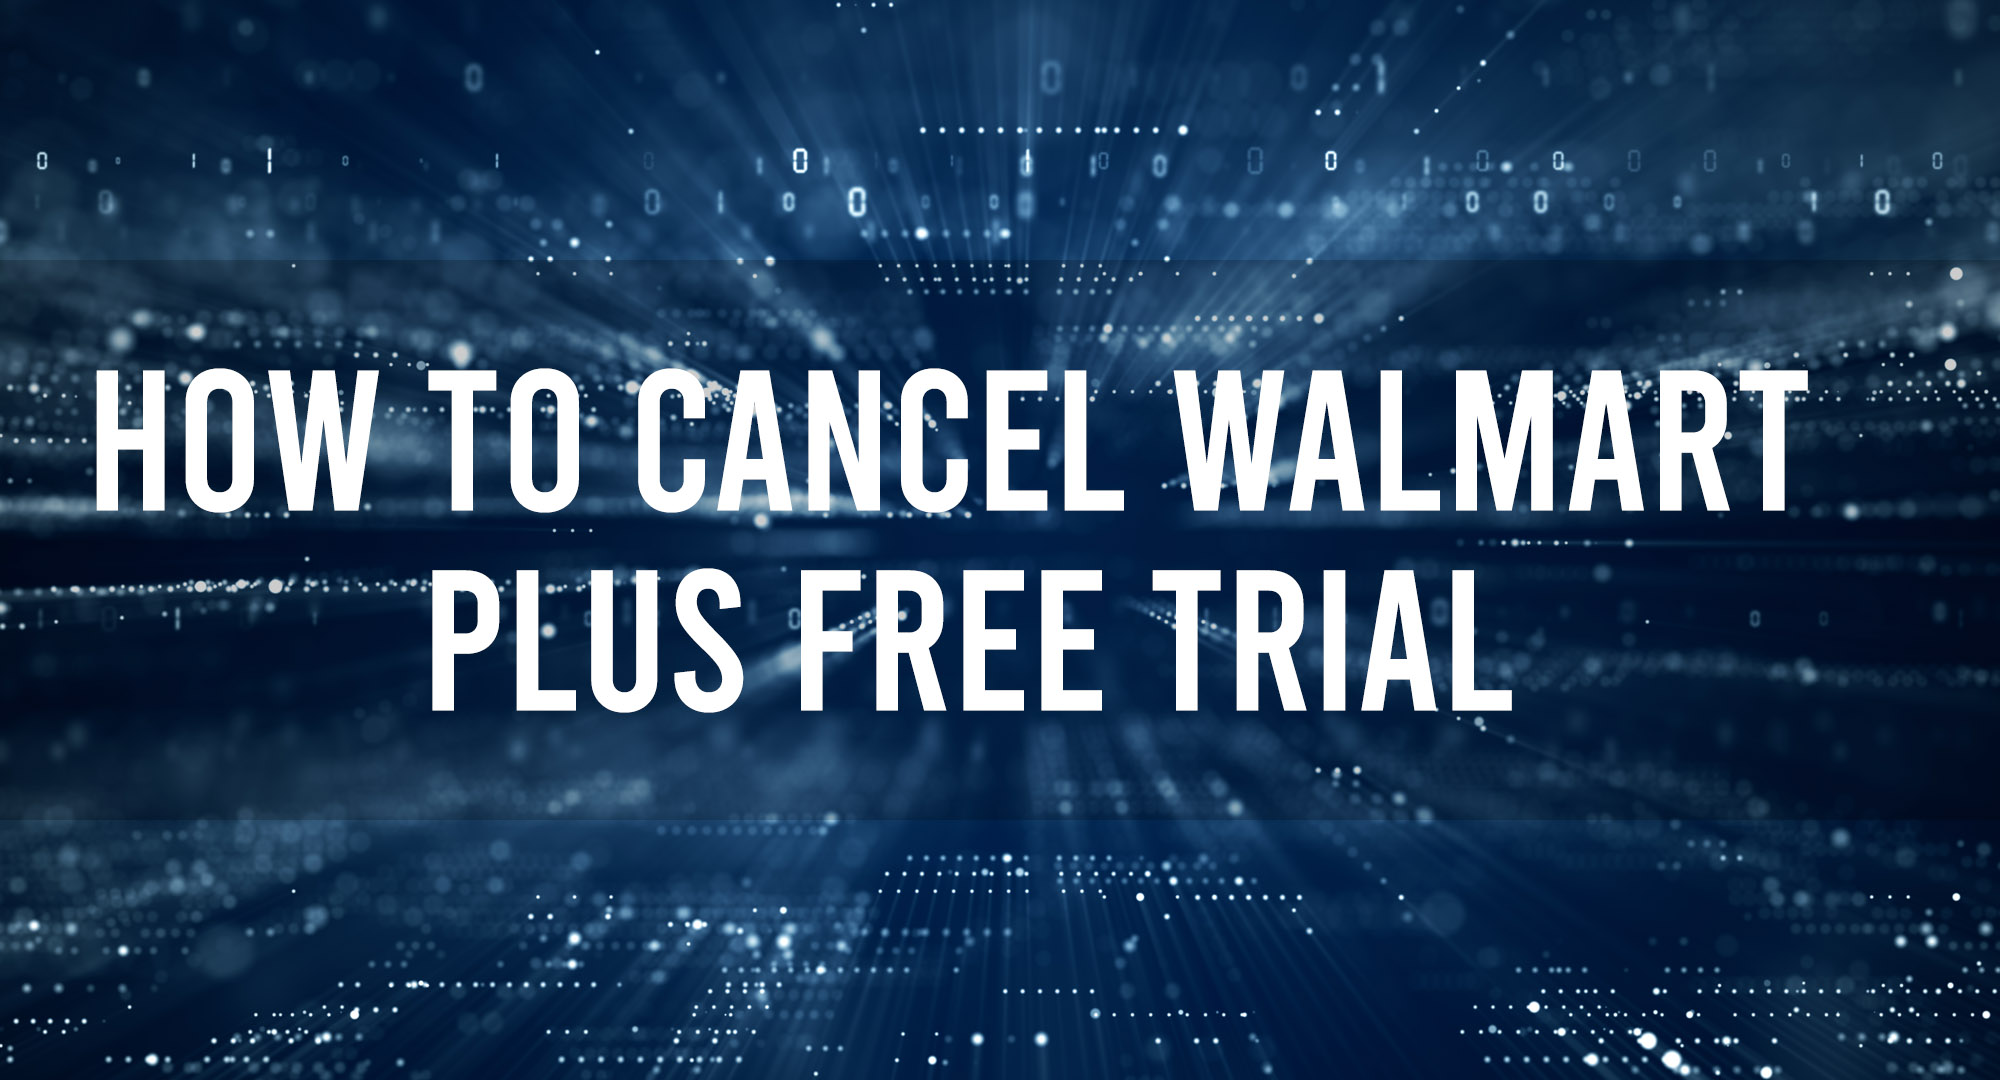 How to cancel walmart plus free trial